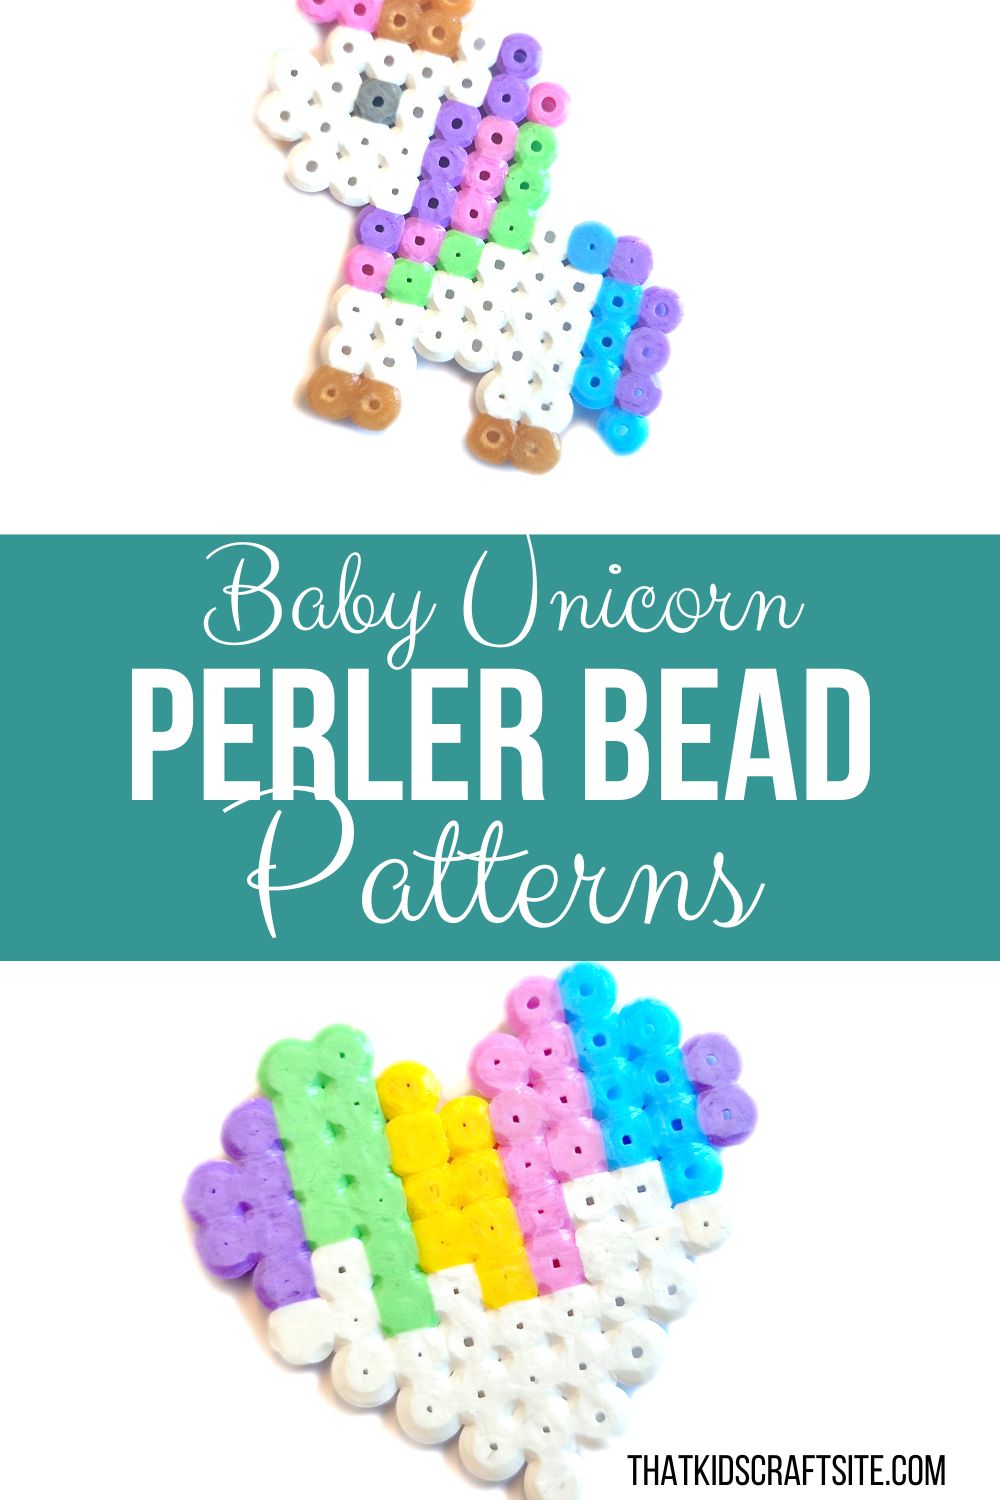 Baby Unicorn Perler Bead Patterns